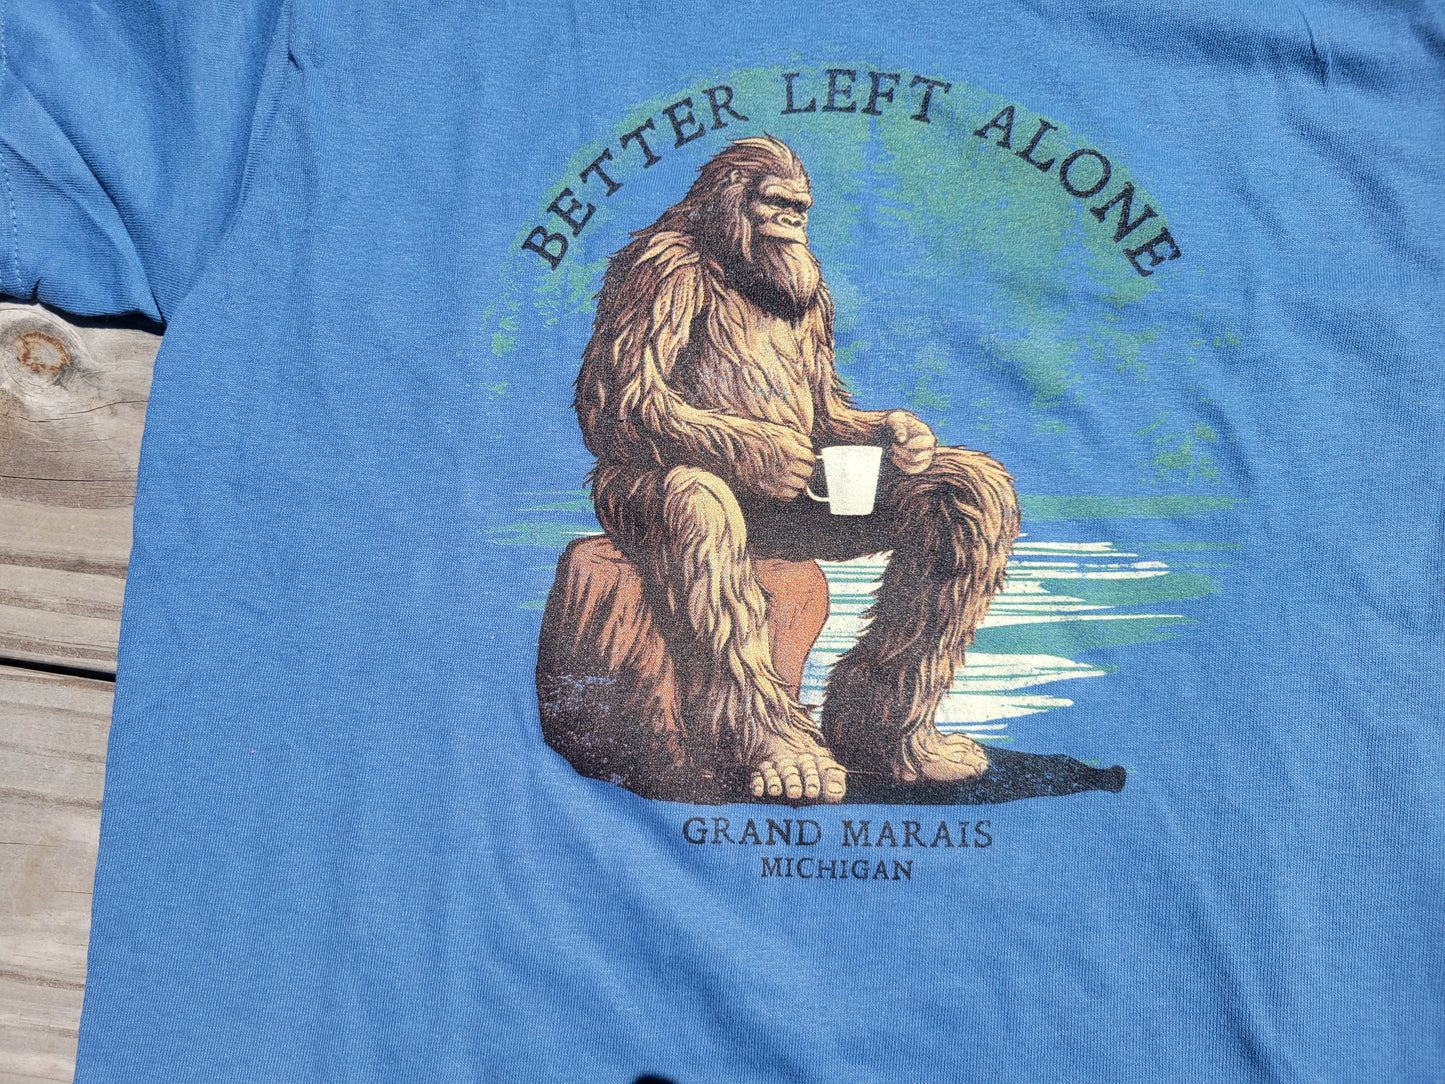 Bigfoot short sleeve shirts